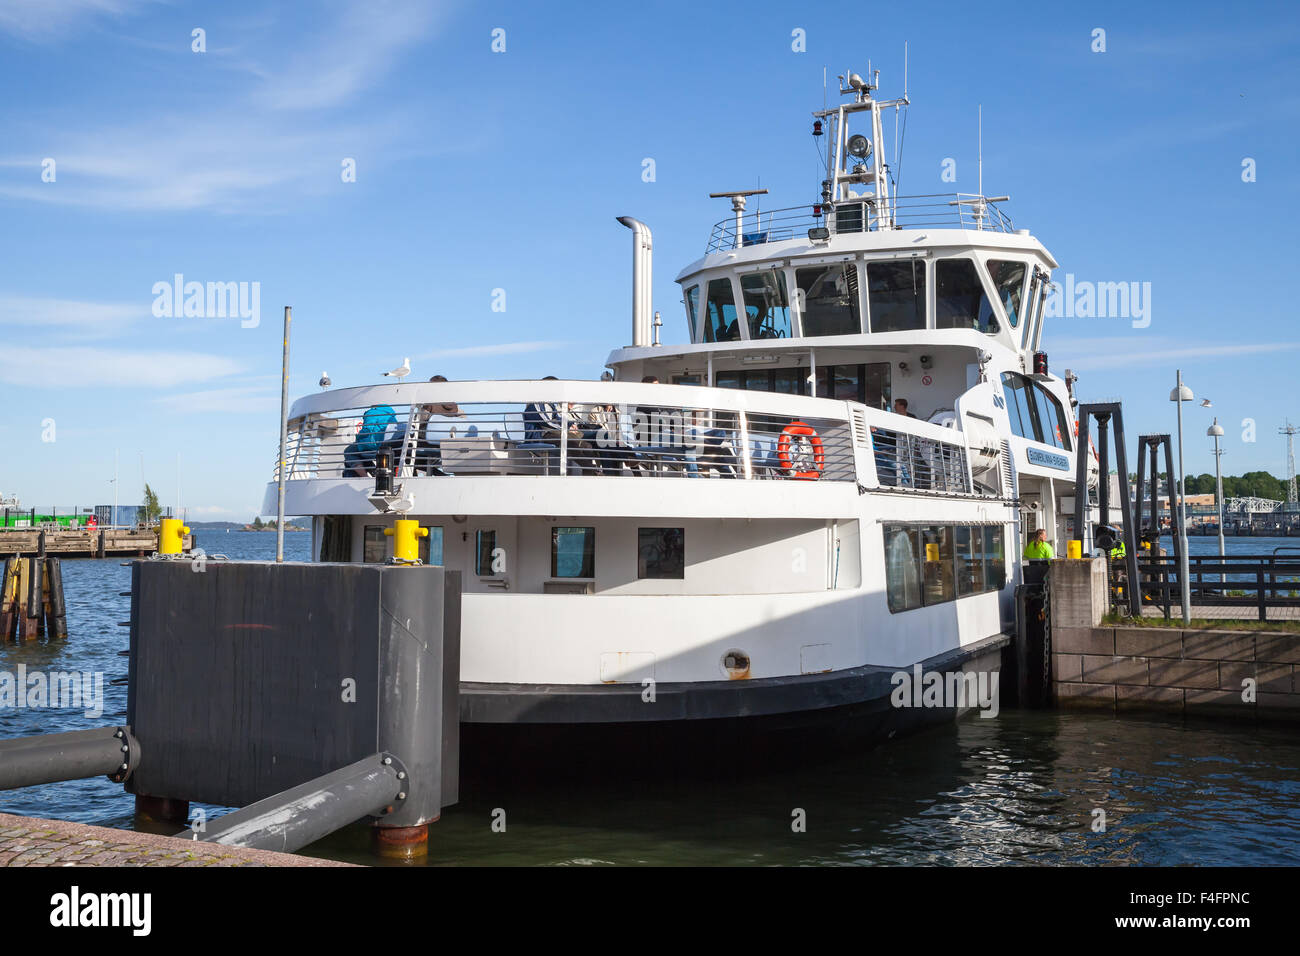 Helsinki, Finland - June 12, 2015: Passenger ferry Suomenlinna Sveaborg with many tourists on board Stock Photo